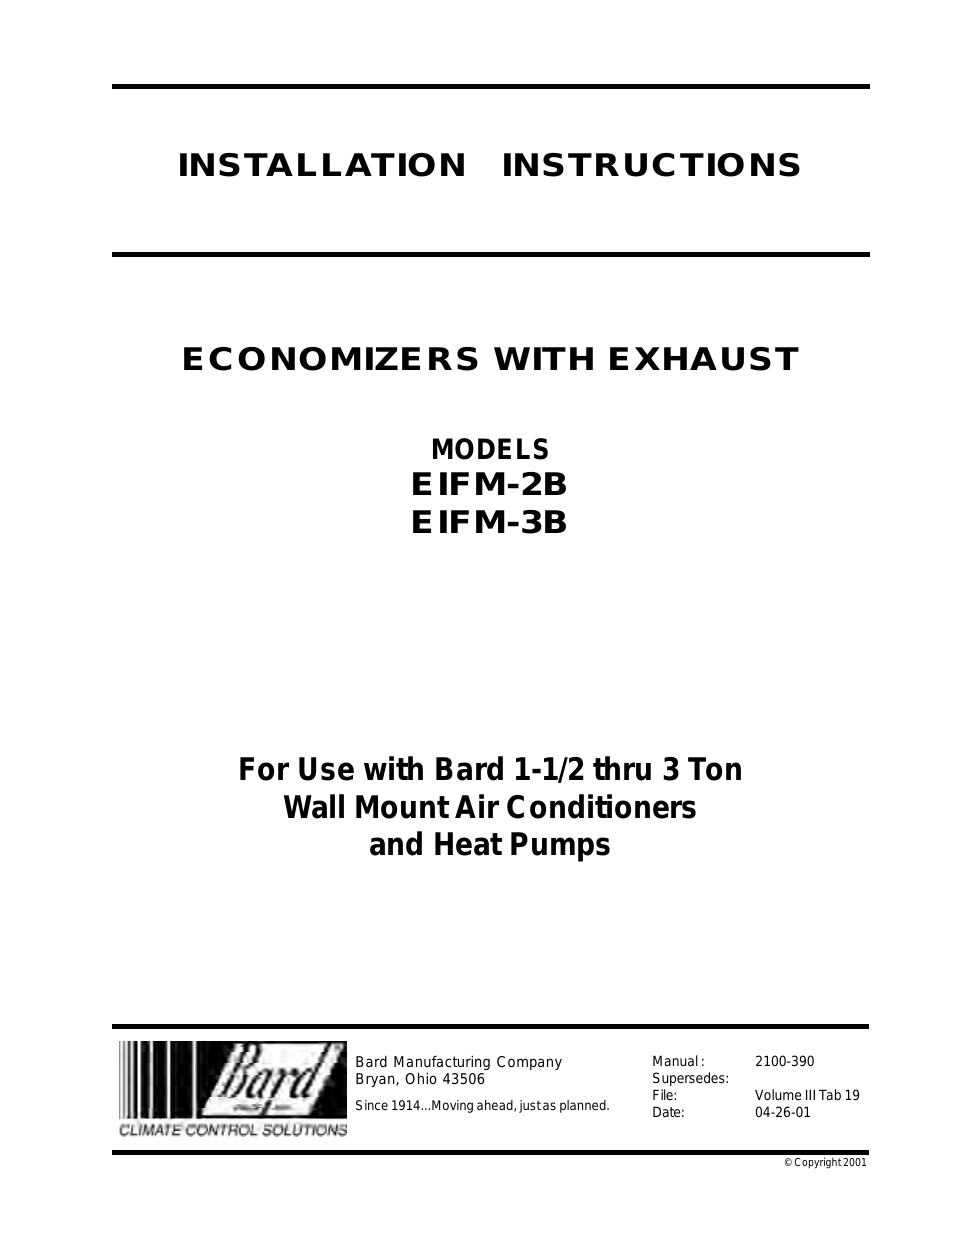 Economizers With Exhaust EIFM-3B